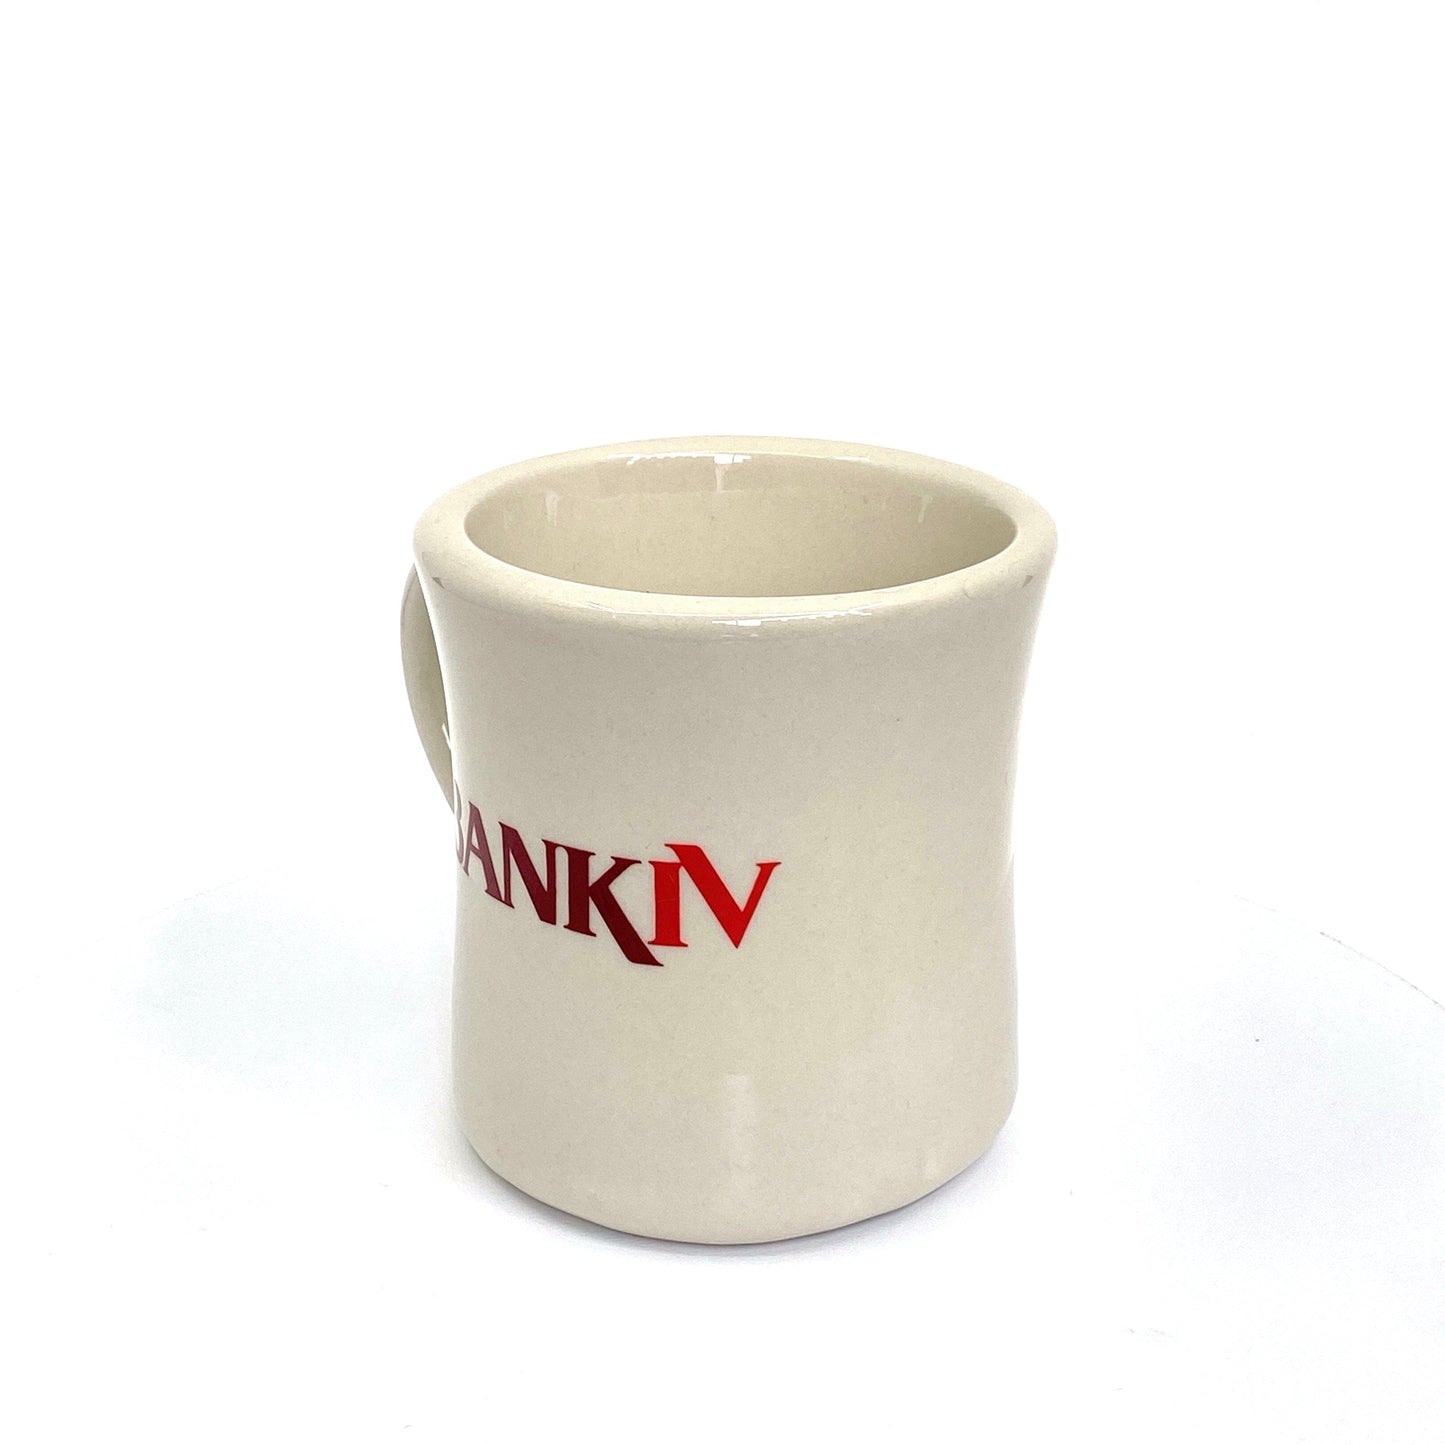 Vintage ‘Bank IV’ Logo Ceramic Coffee Mug Cup Vintage 14 Fl Oz